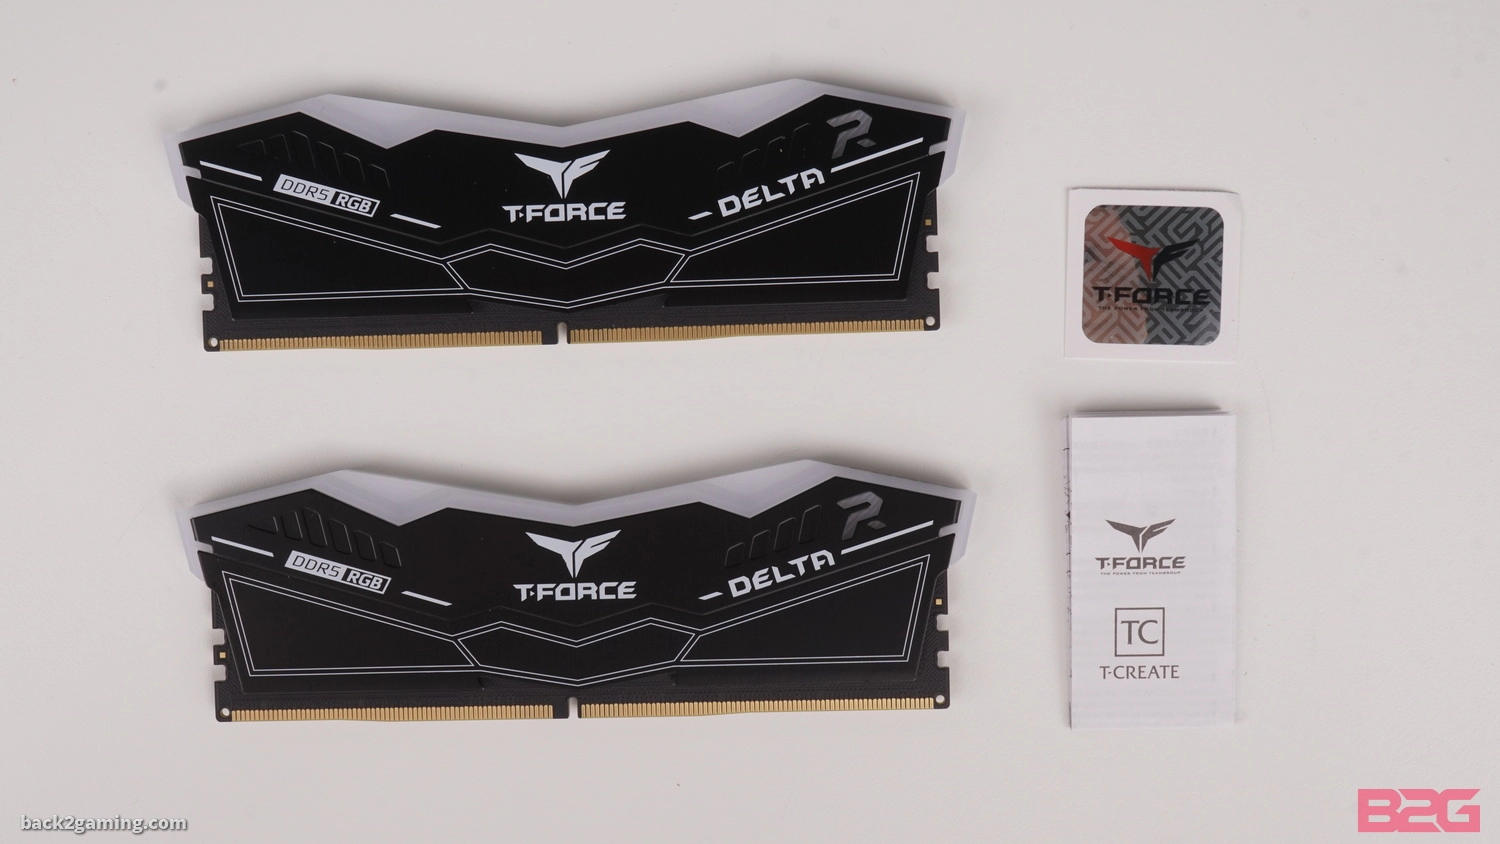 T-Force Delta RGB DDR5-6200 32GB Memory Kit Review - t-force delta rgb ddr5